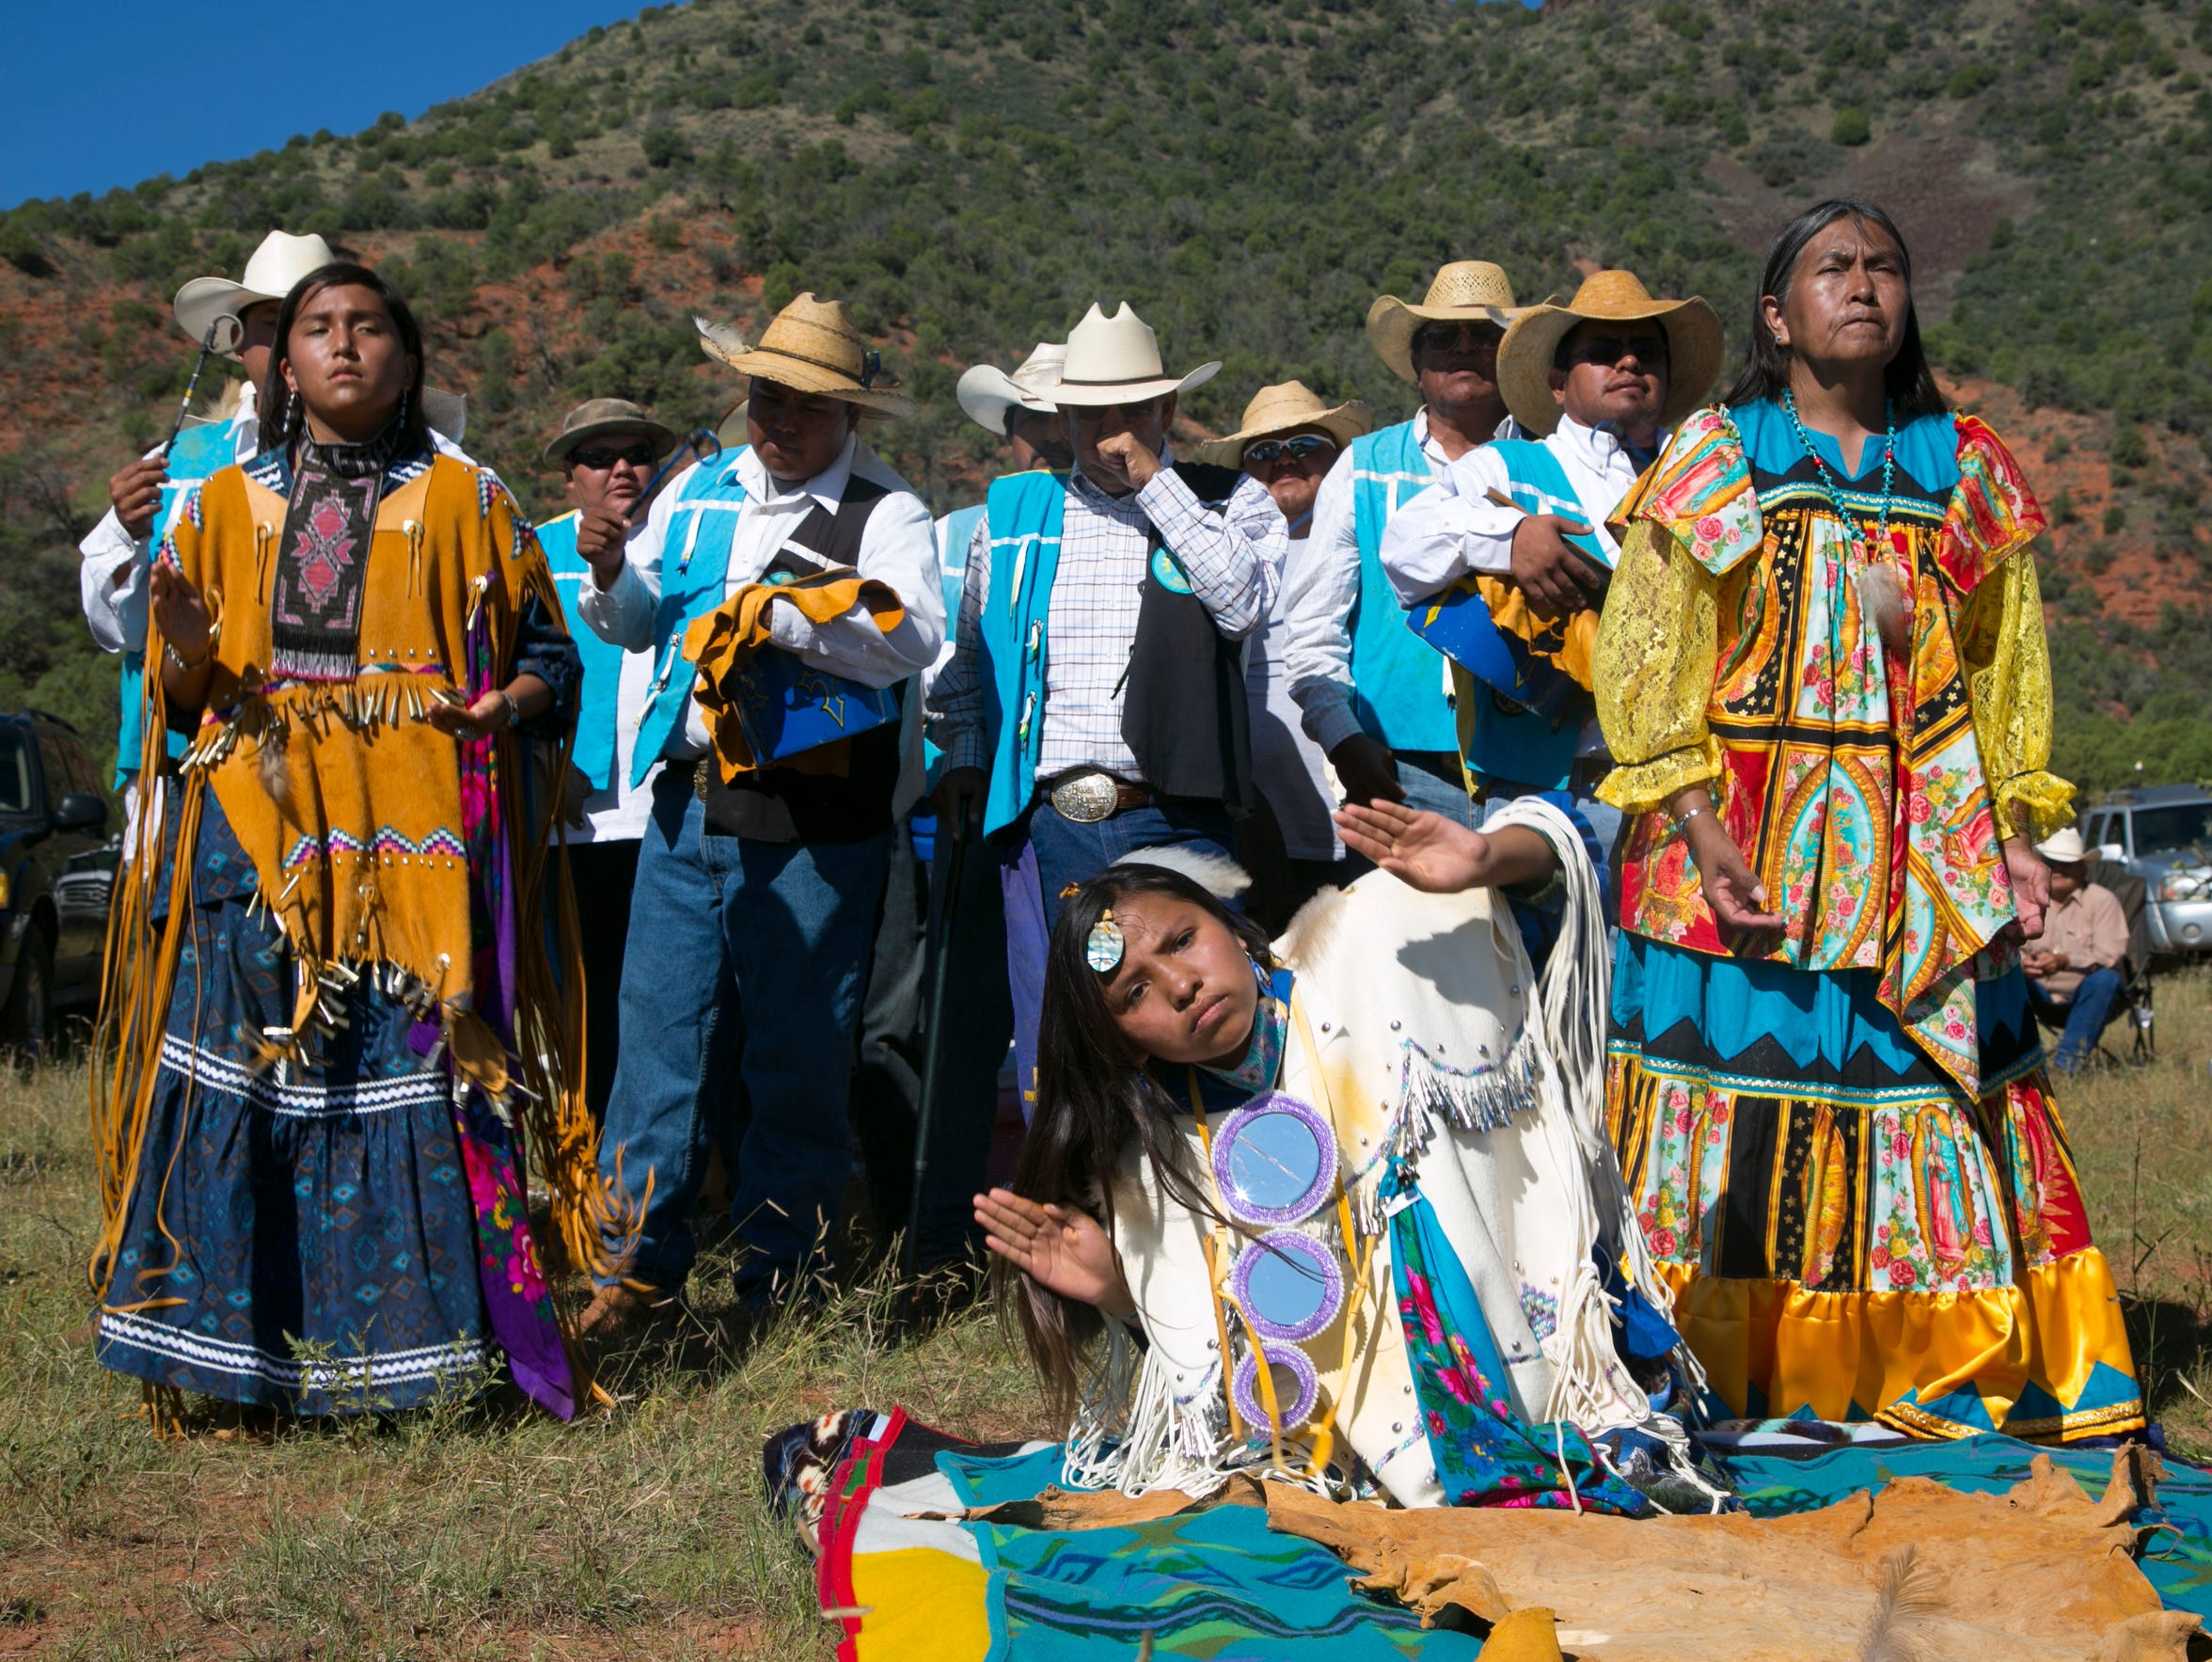 An Apache dance into womanhood